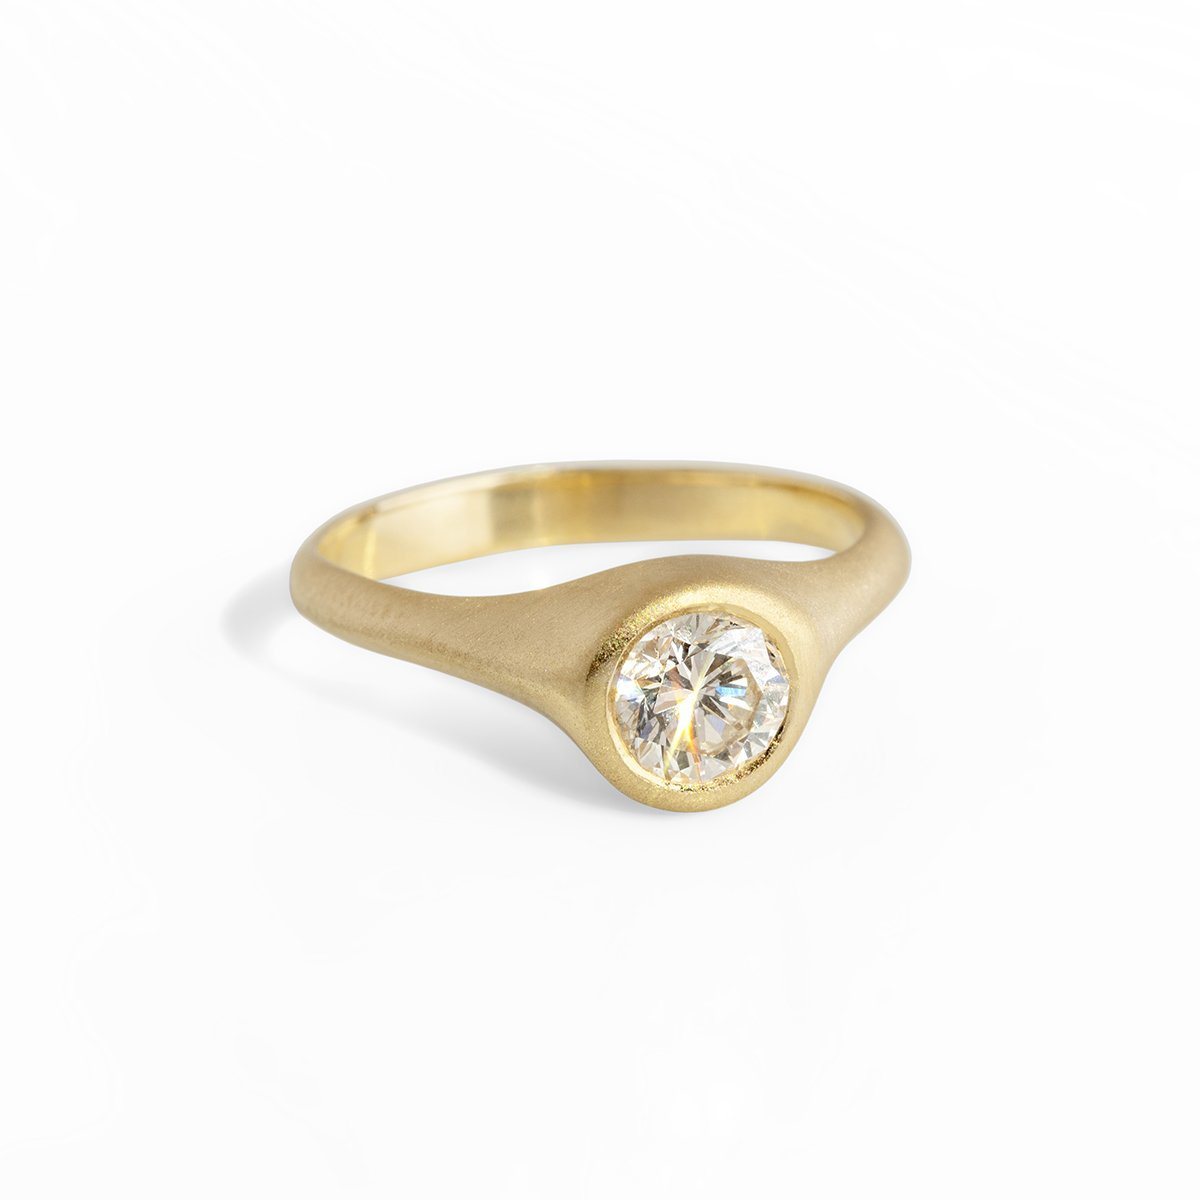 ELINA GLEIZER Select Your Size / 0.3 carat / 14K Round Asymmetric Bezel Ring